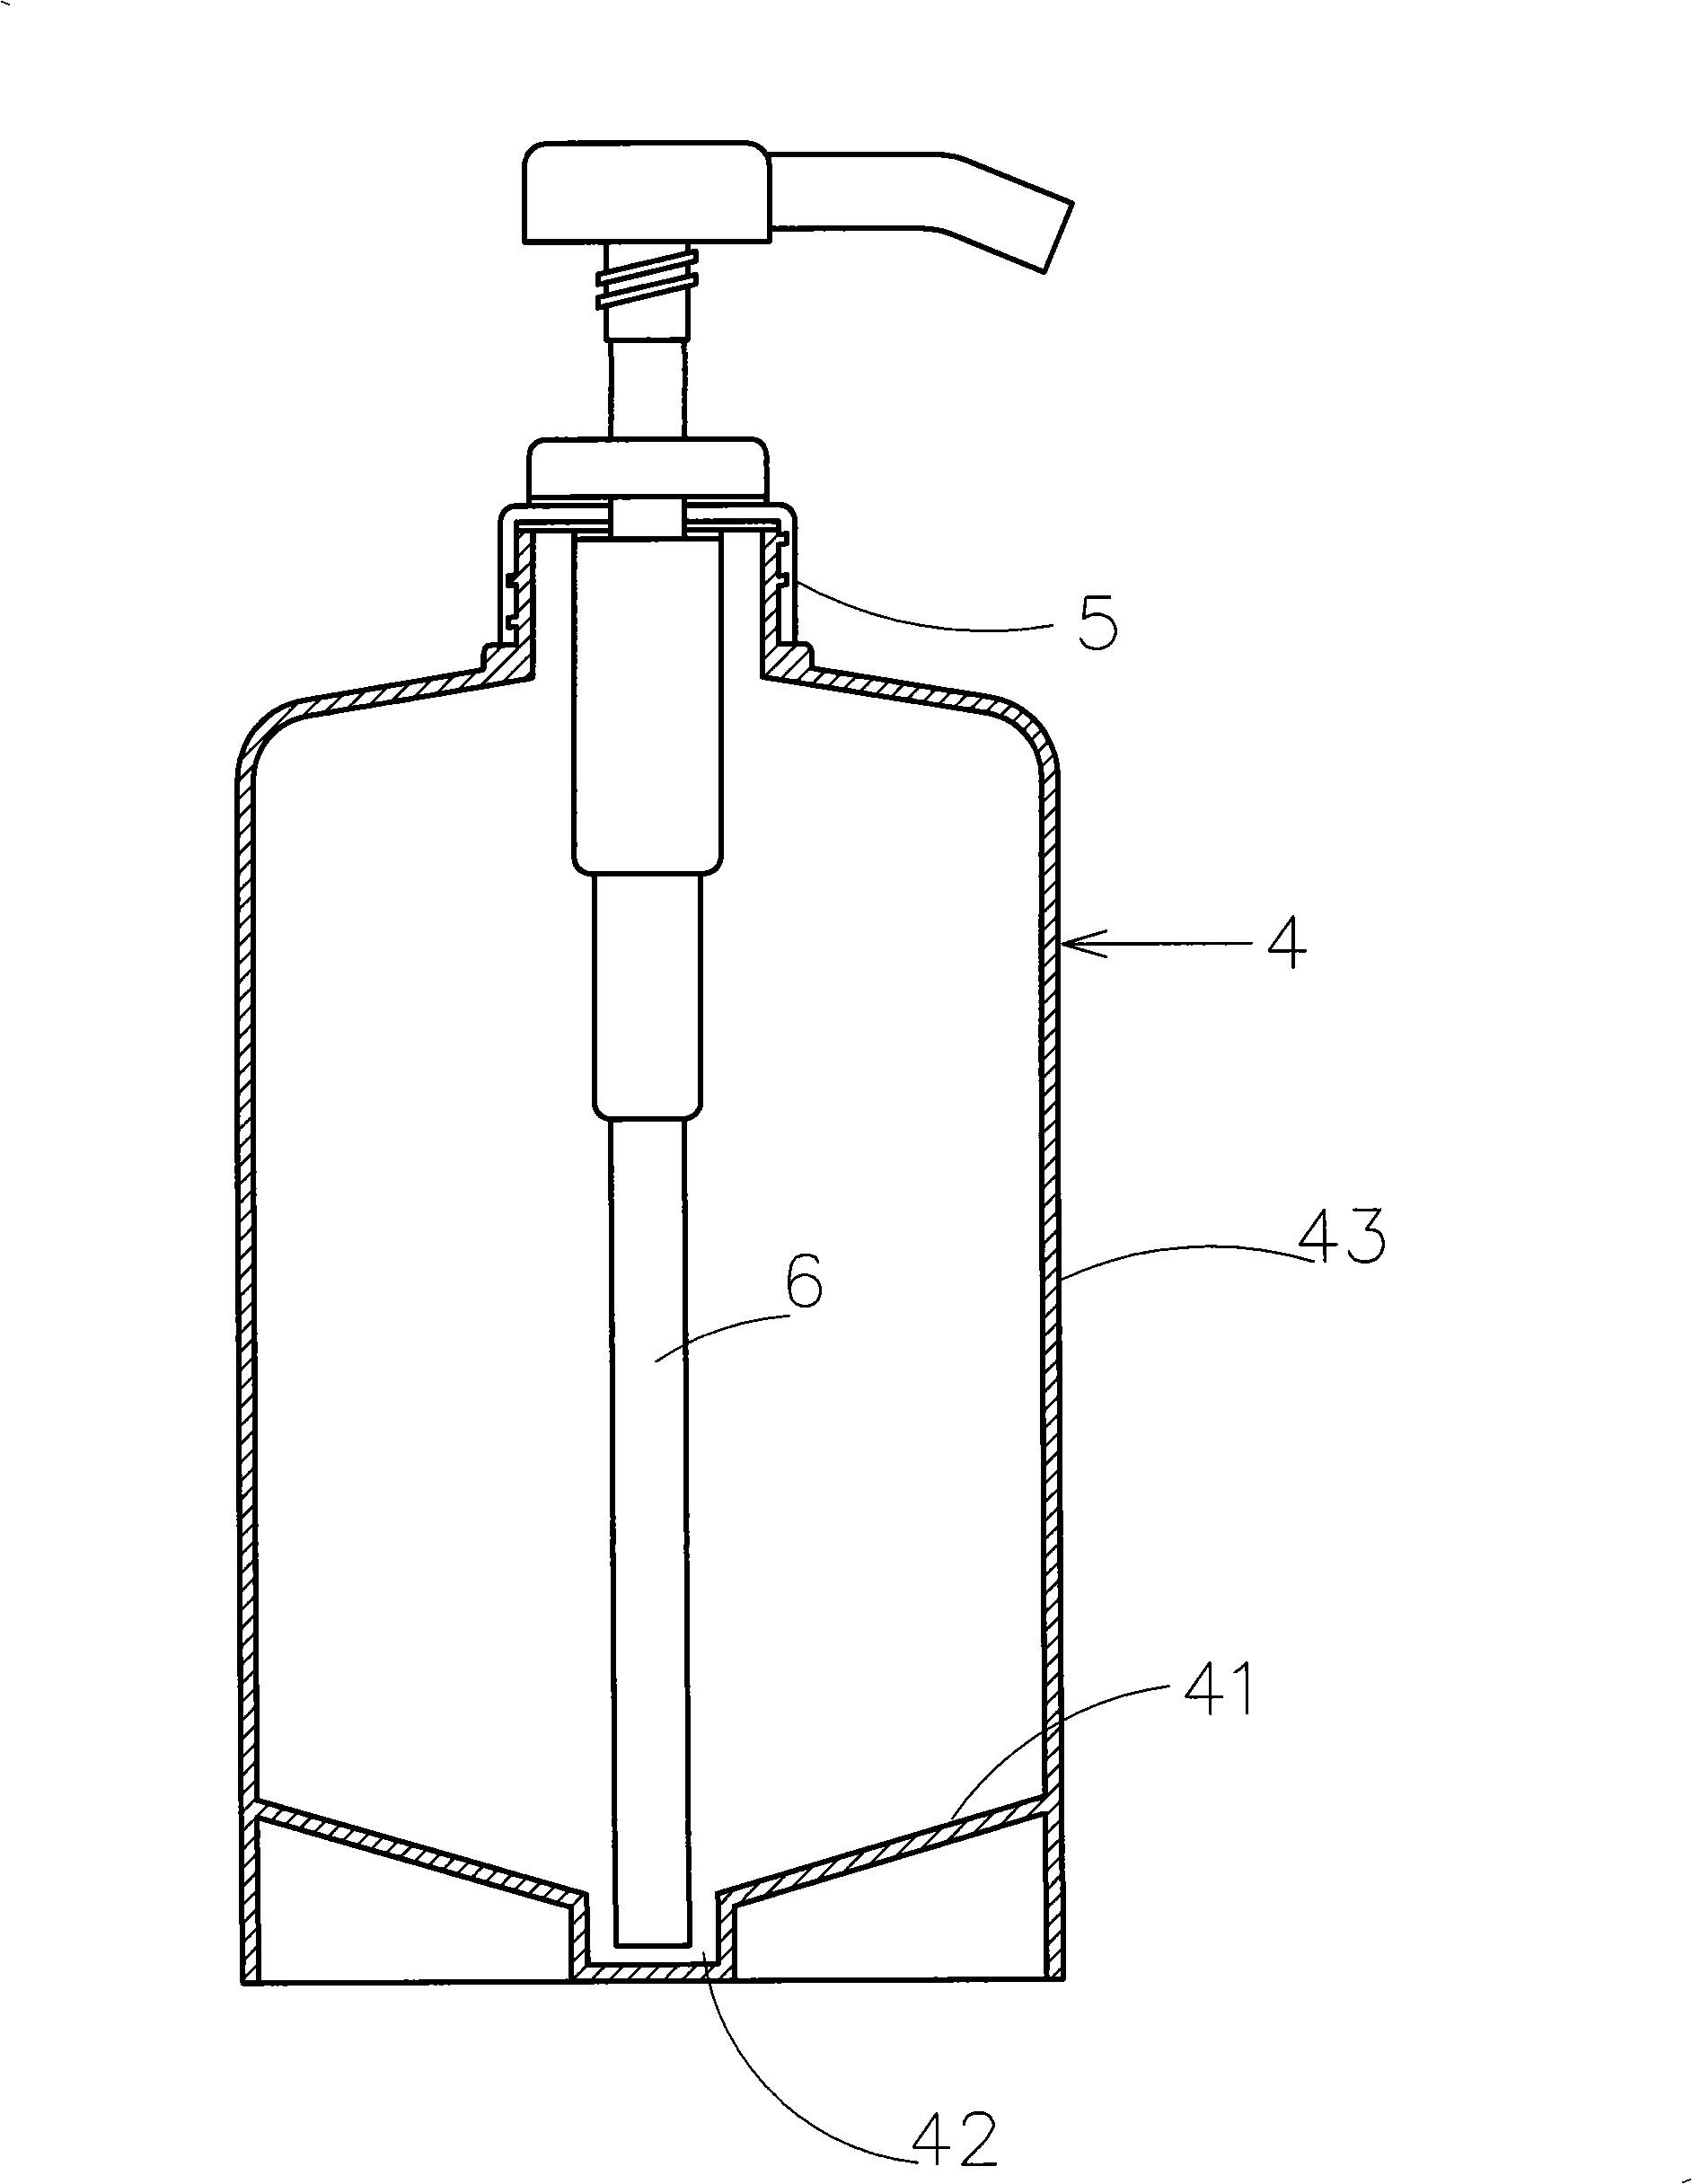 Press-fetching type liquid suction bottle